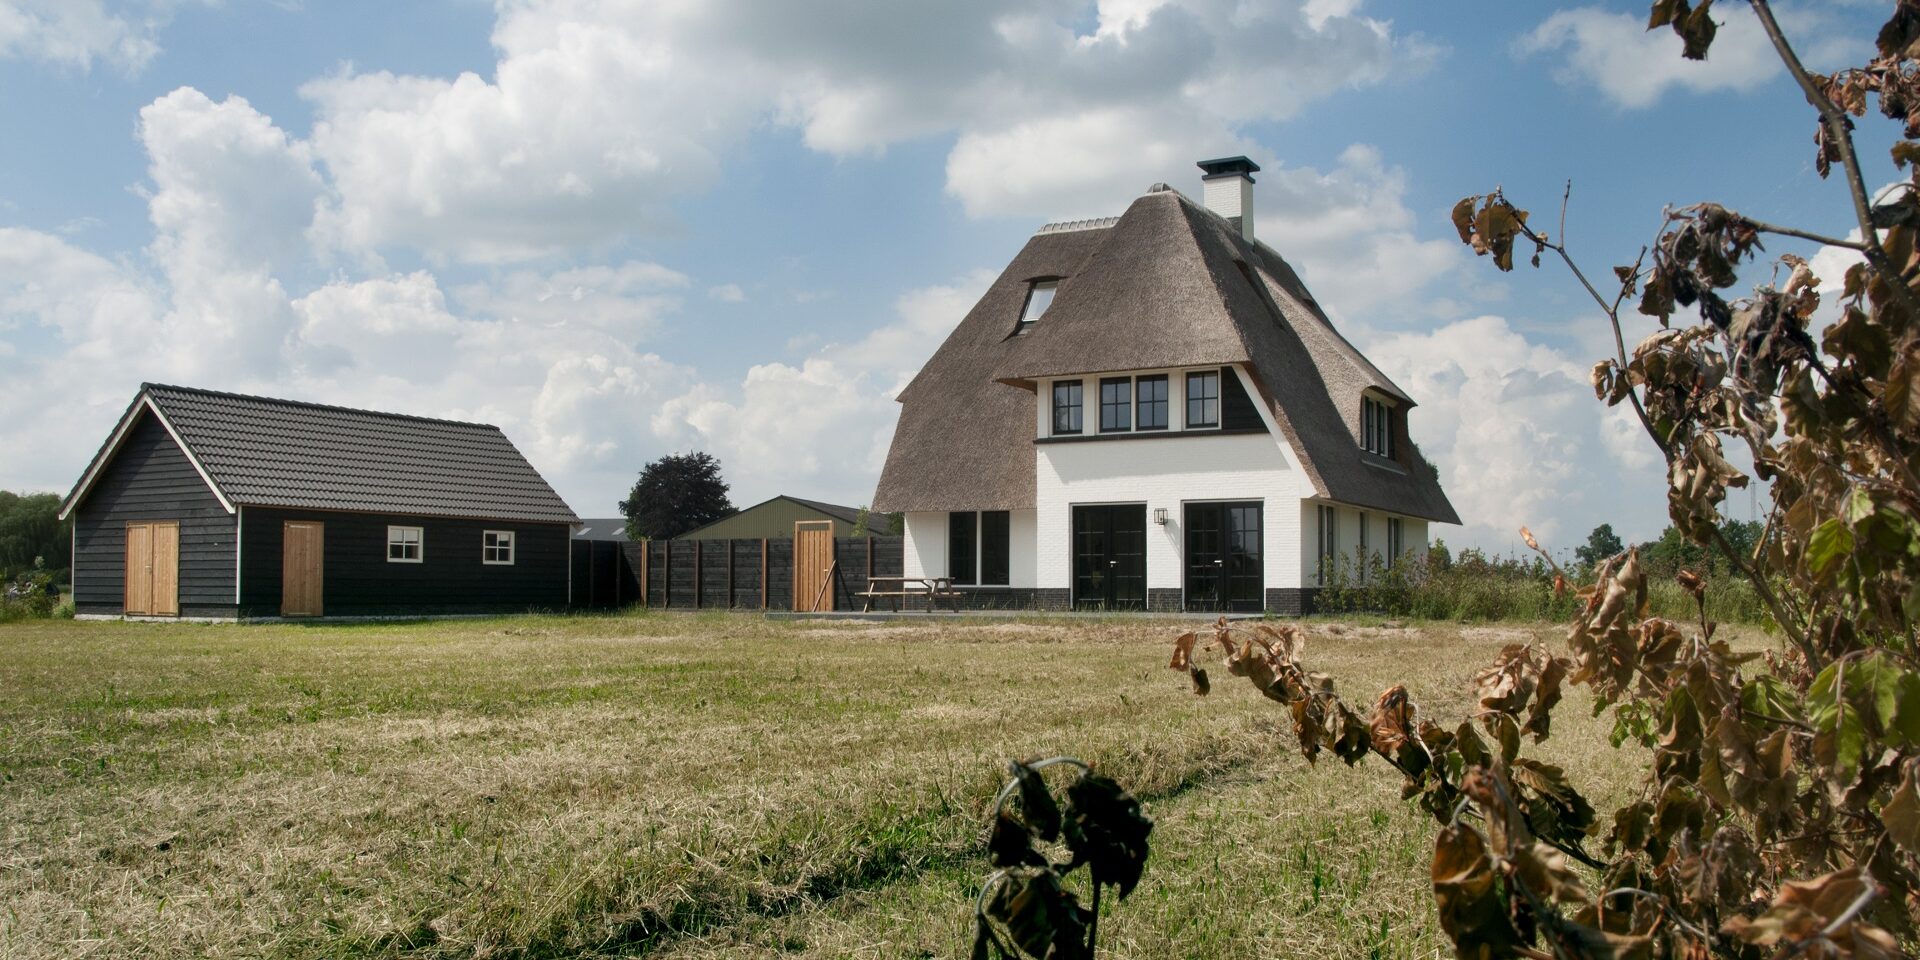 Gerealiseerde villa Boswitje te Hulst - Architectuurwonen - achterzijde 1920x1080